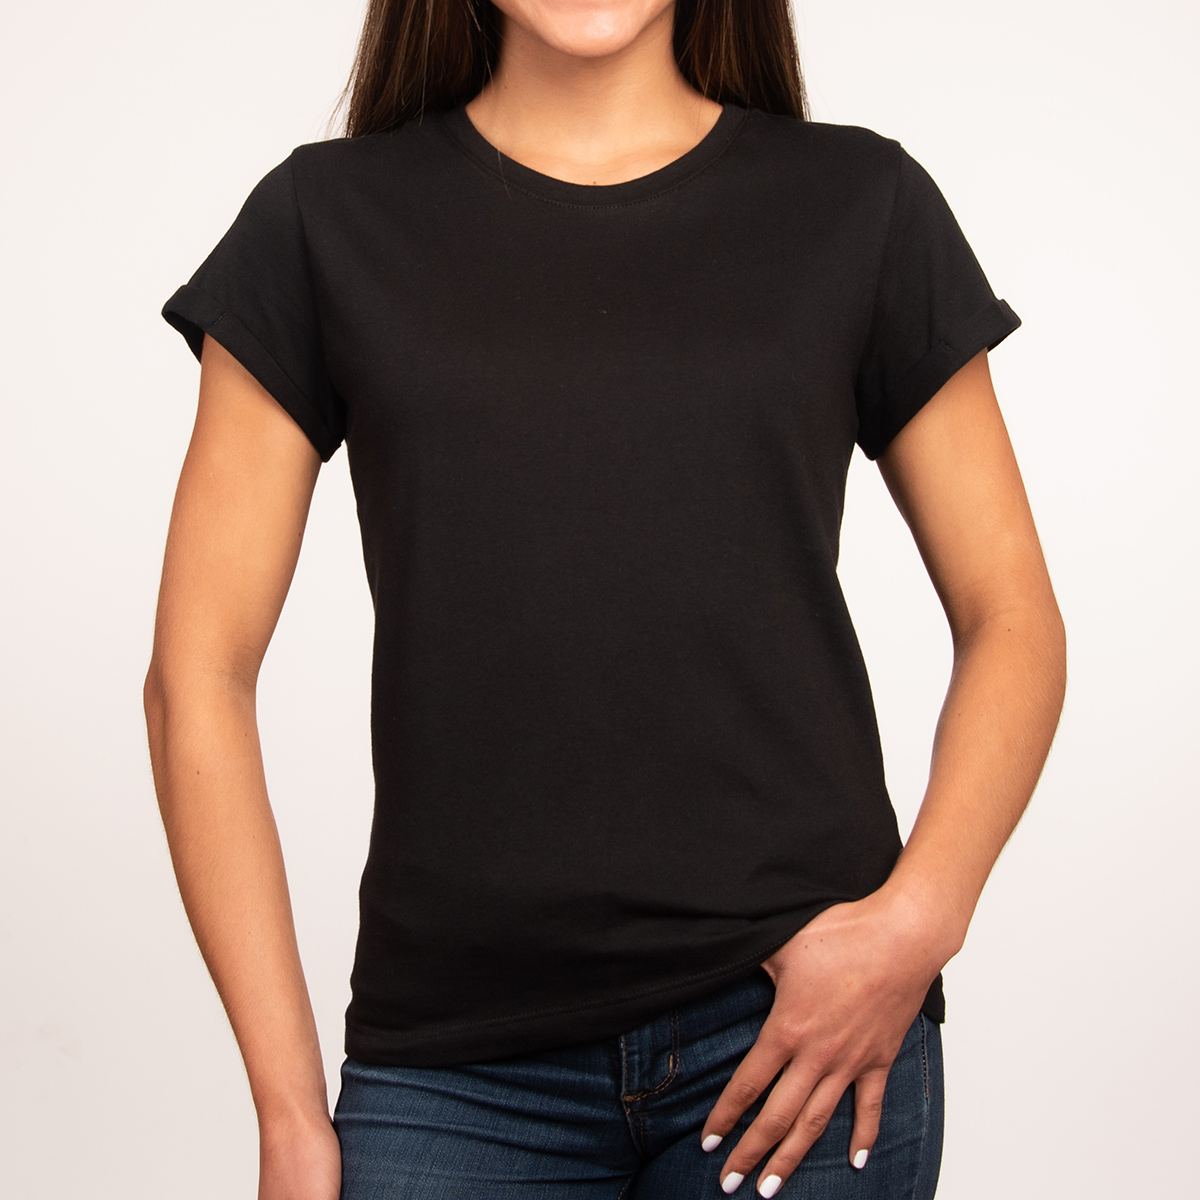 Camiseta con frase negra mujer sale pa pintura white recoleta curva